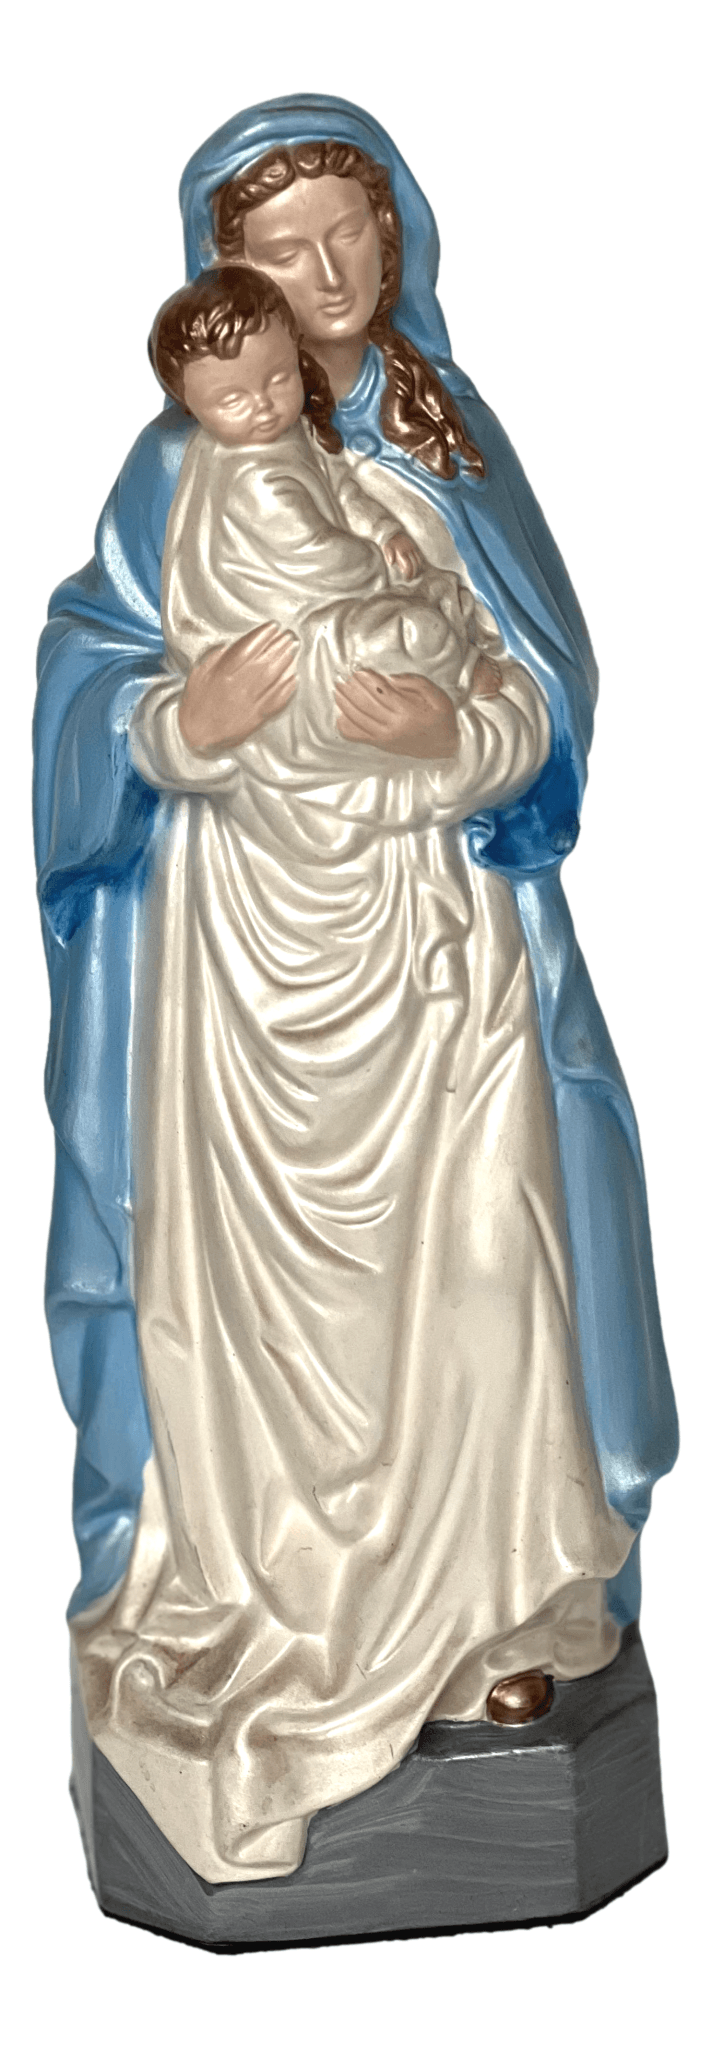 Statue Ceramic Madonna And Child Handpainted